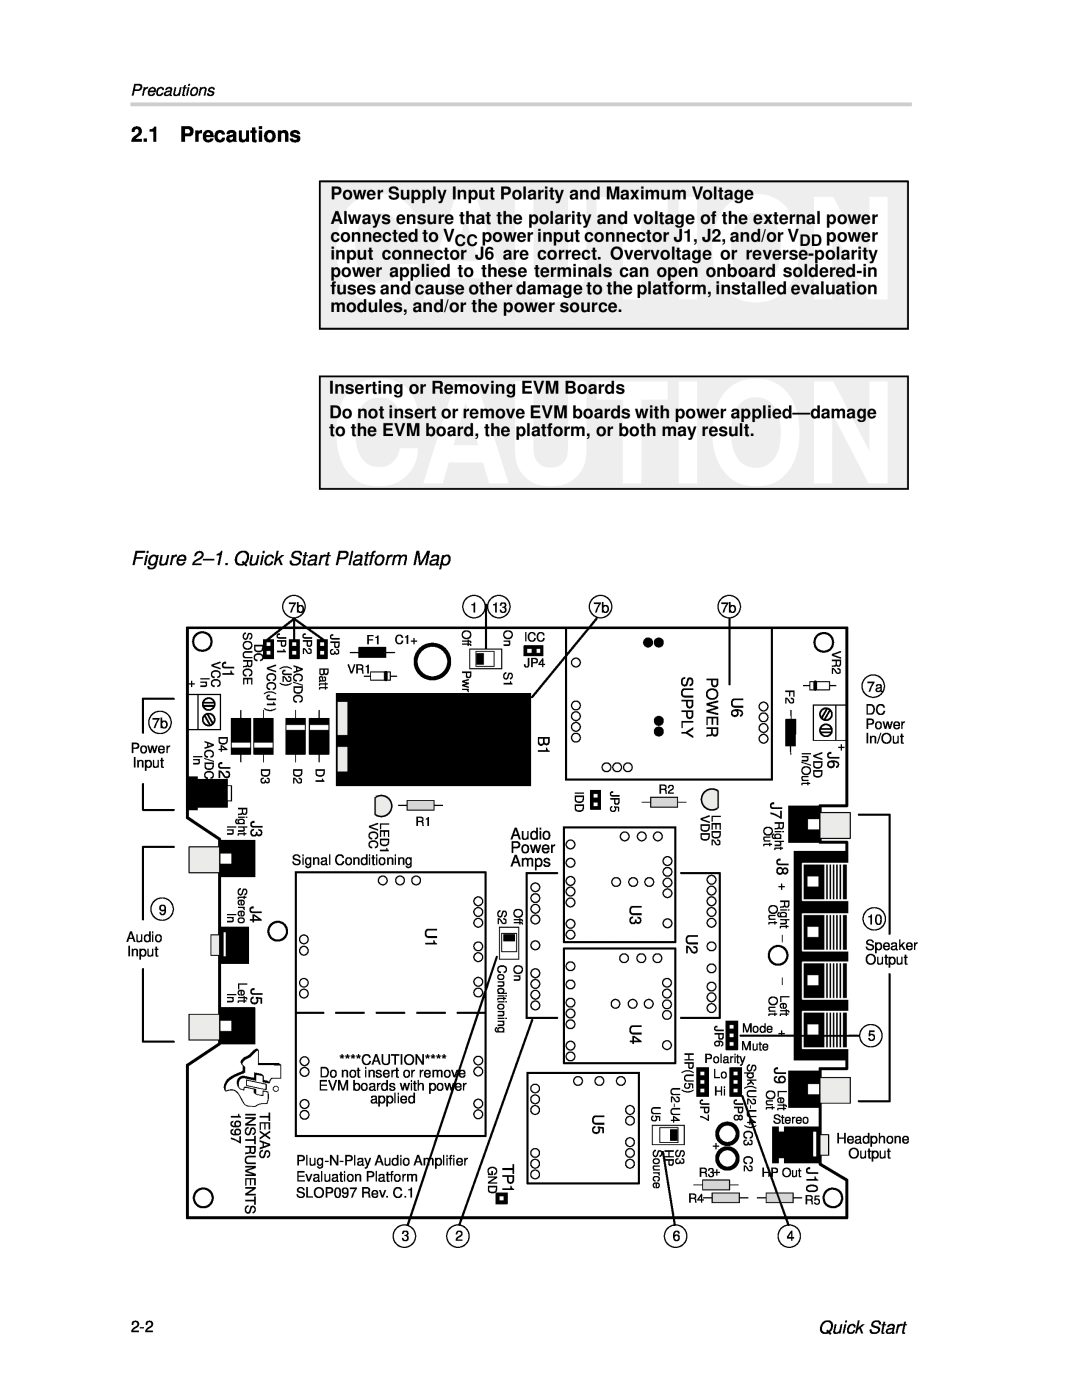 Texas Instruments SLOU121 manual Precautions, 1.Quick Start Platform Map 